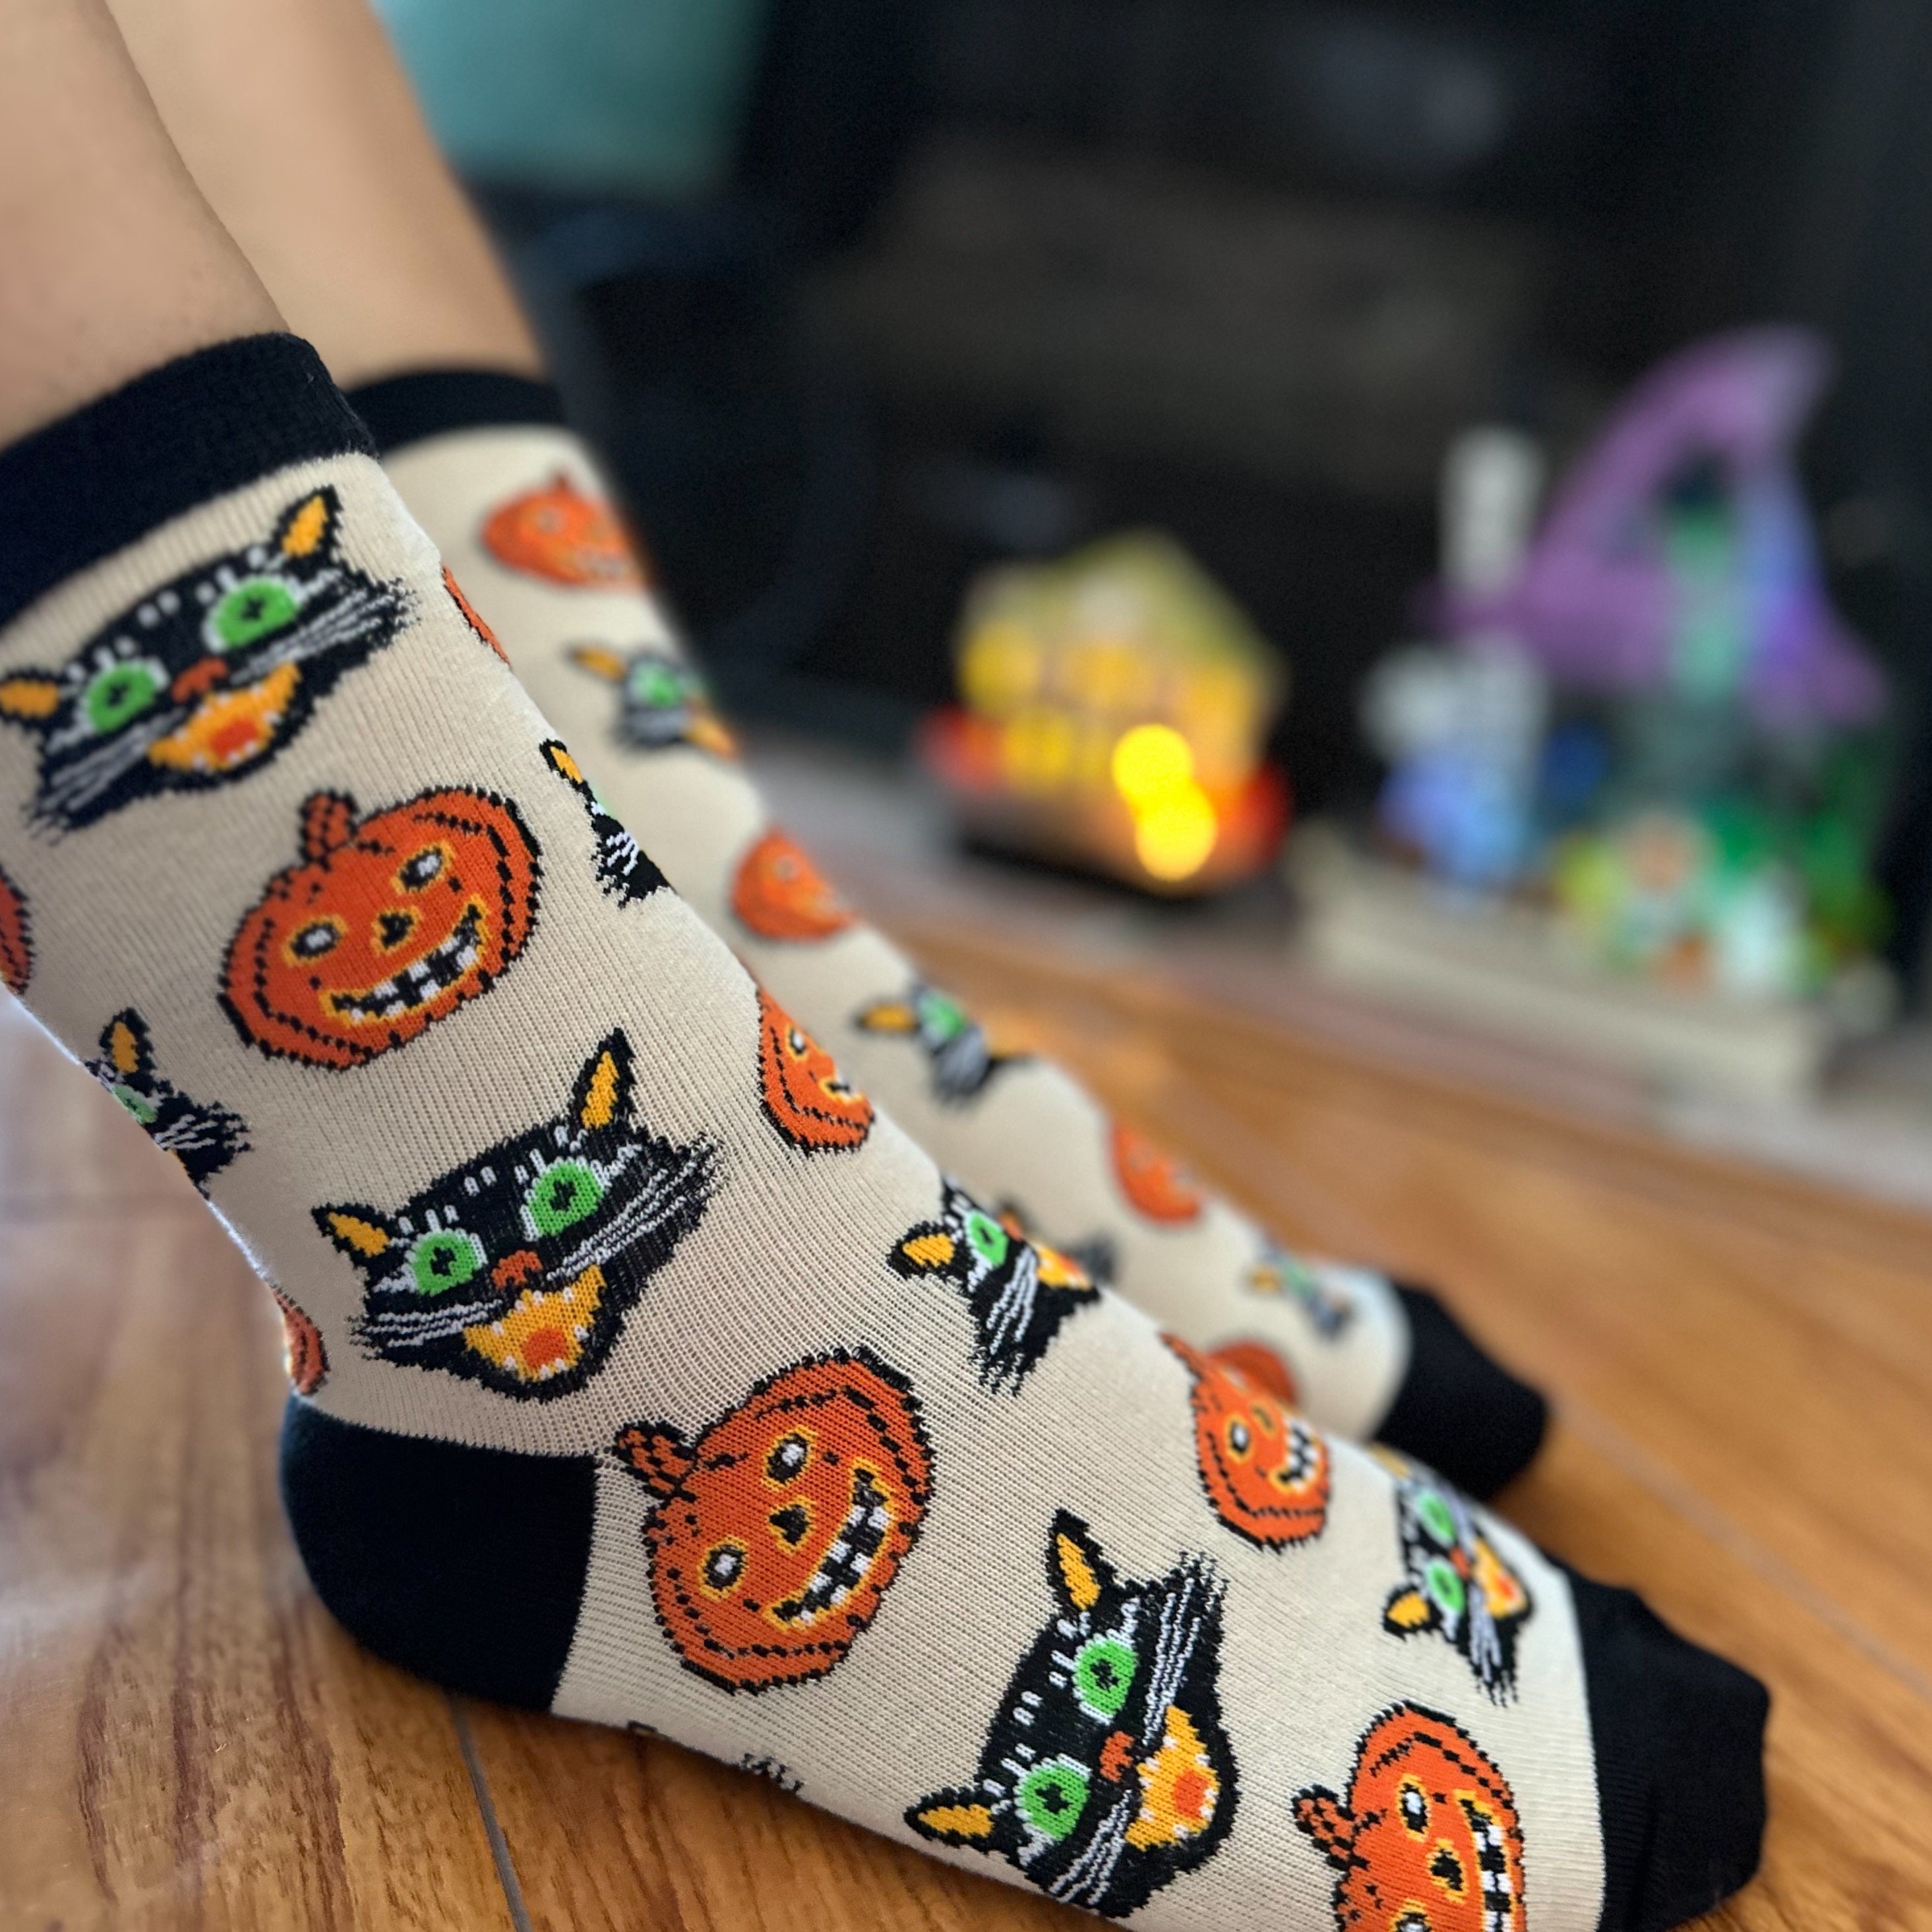 Cats and Pumpkins from the Sock Panda (Adult Medium)